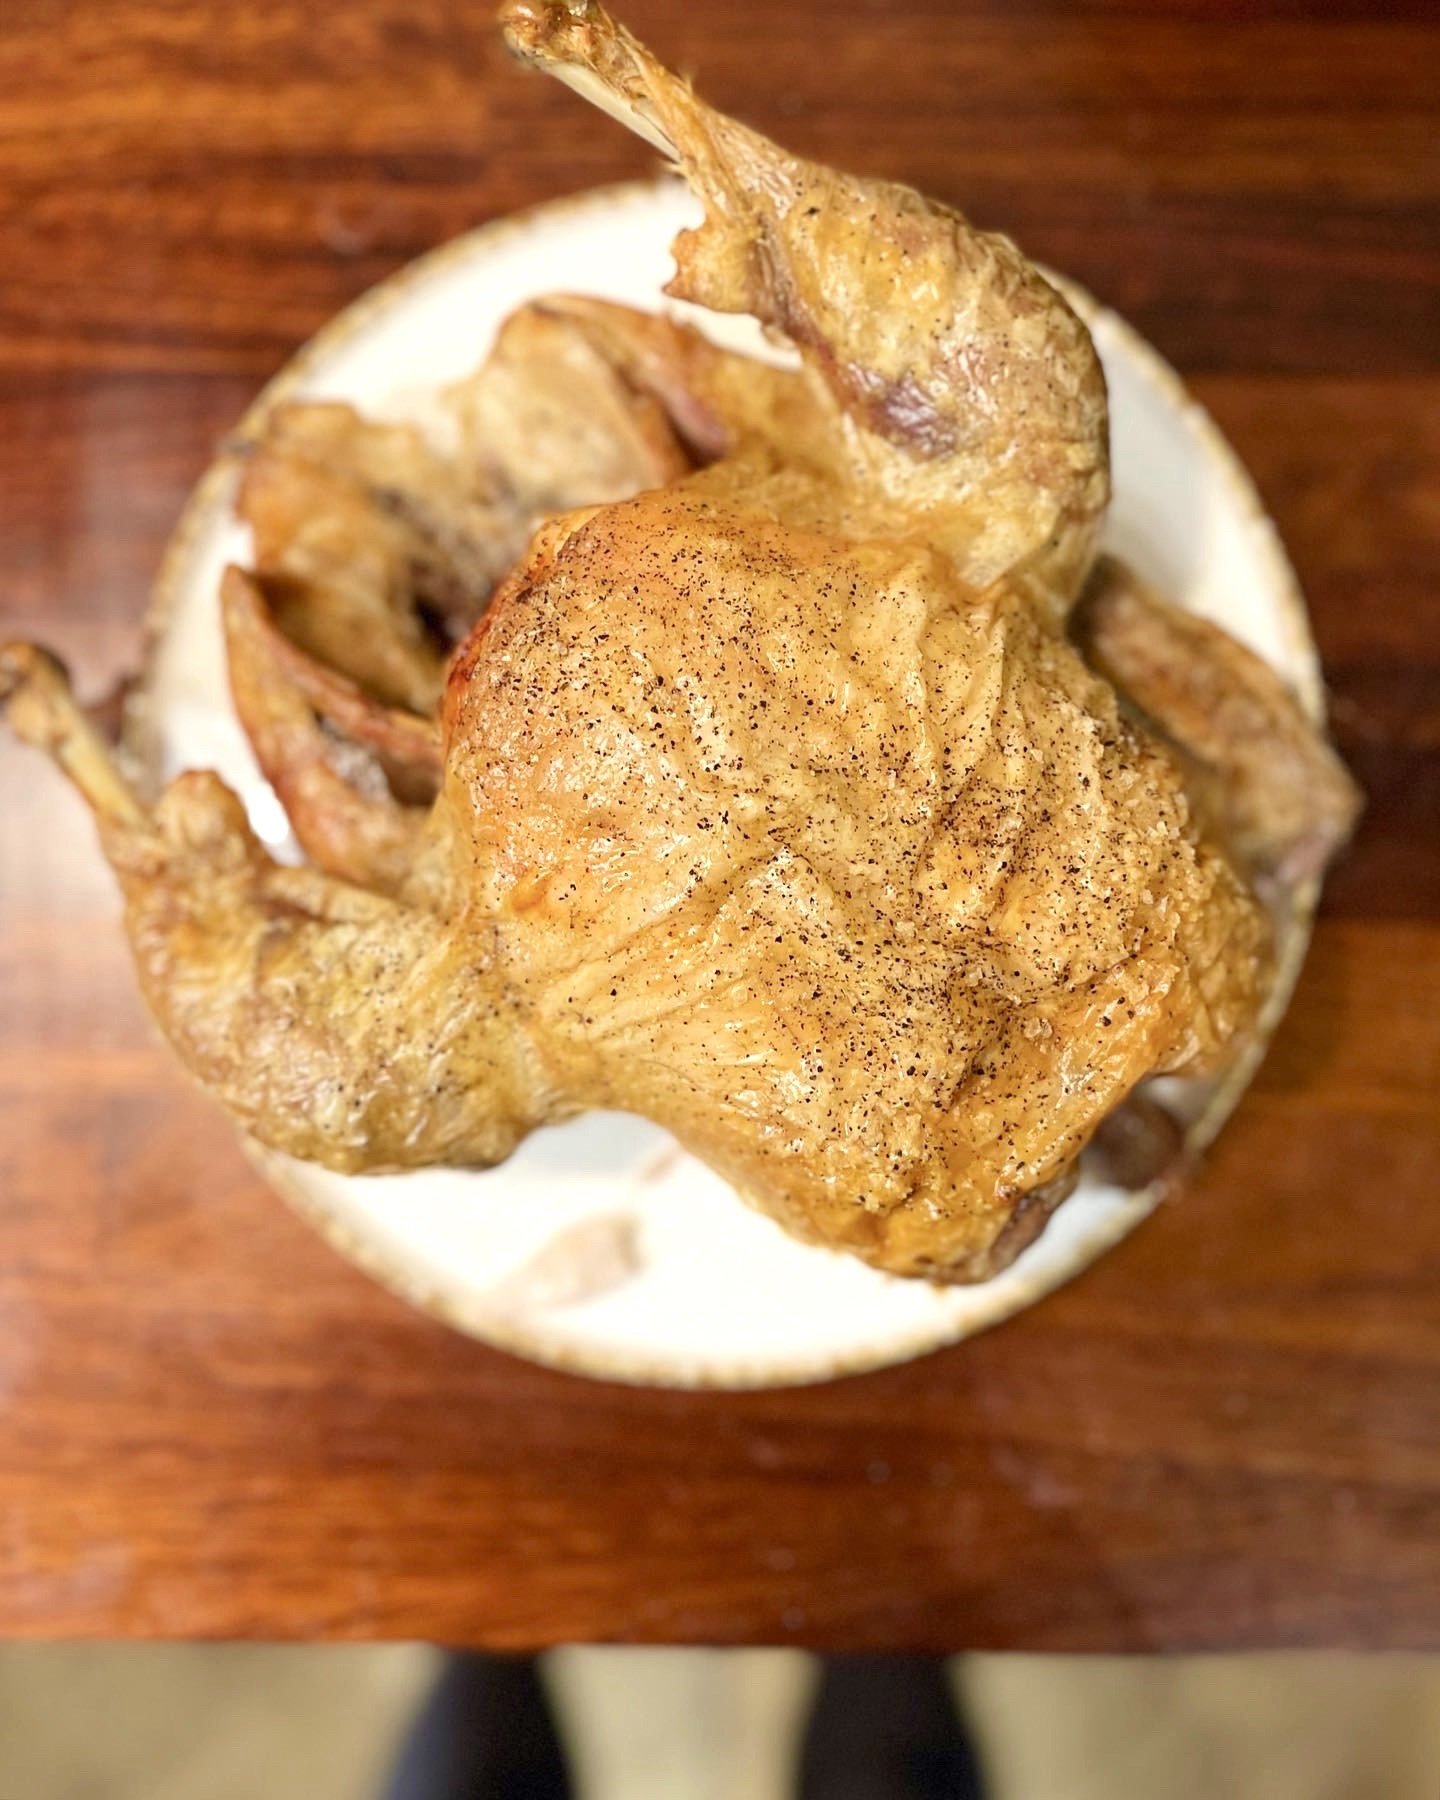 A Sutton Hoo roast chicken